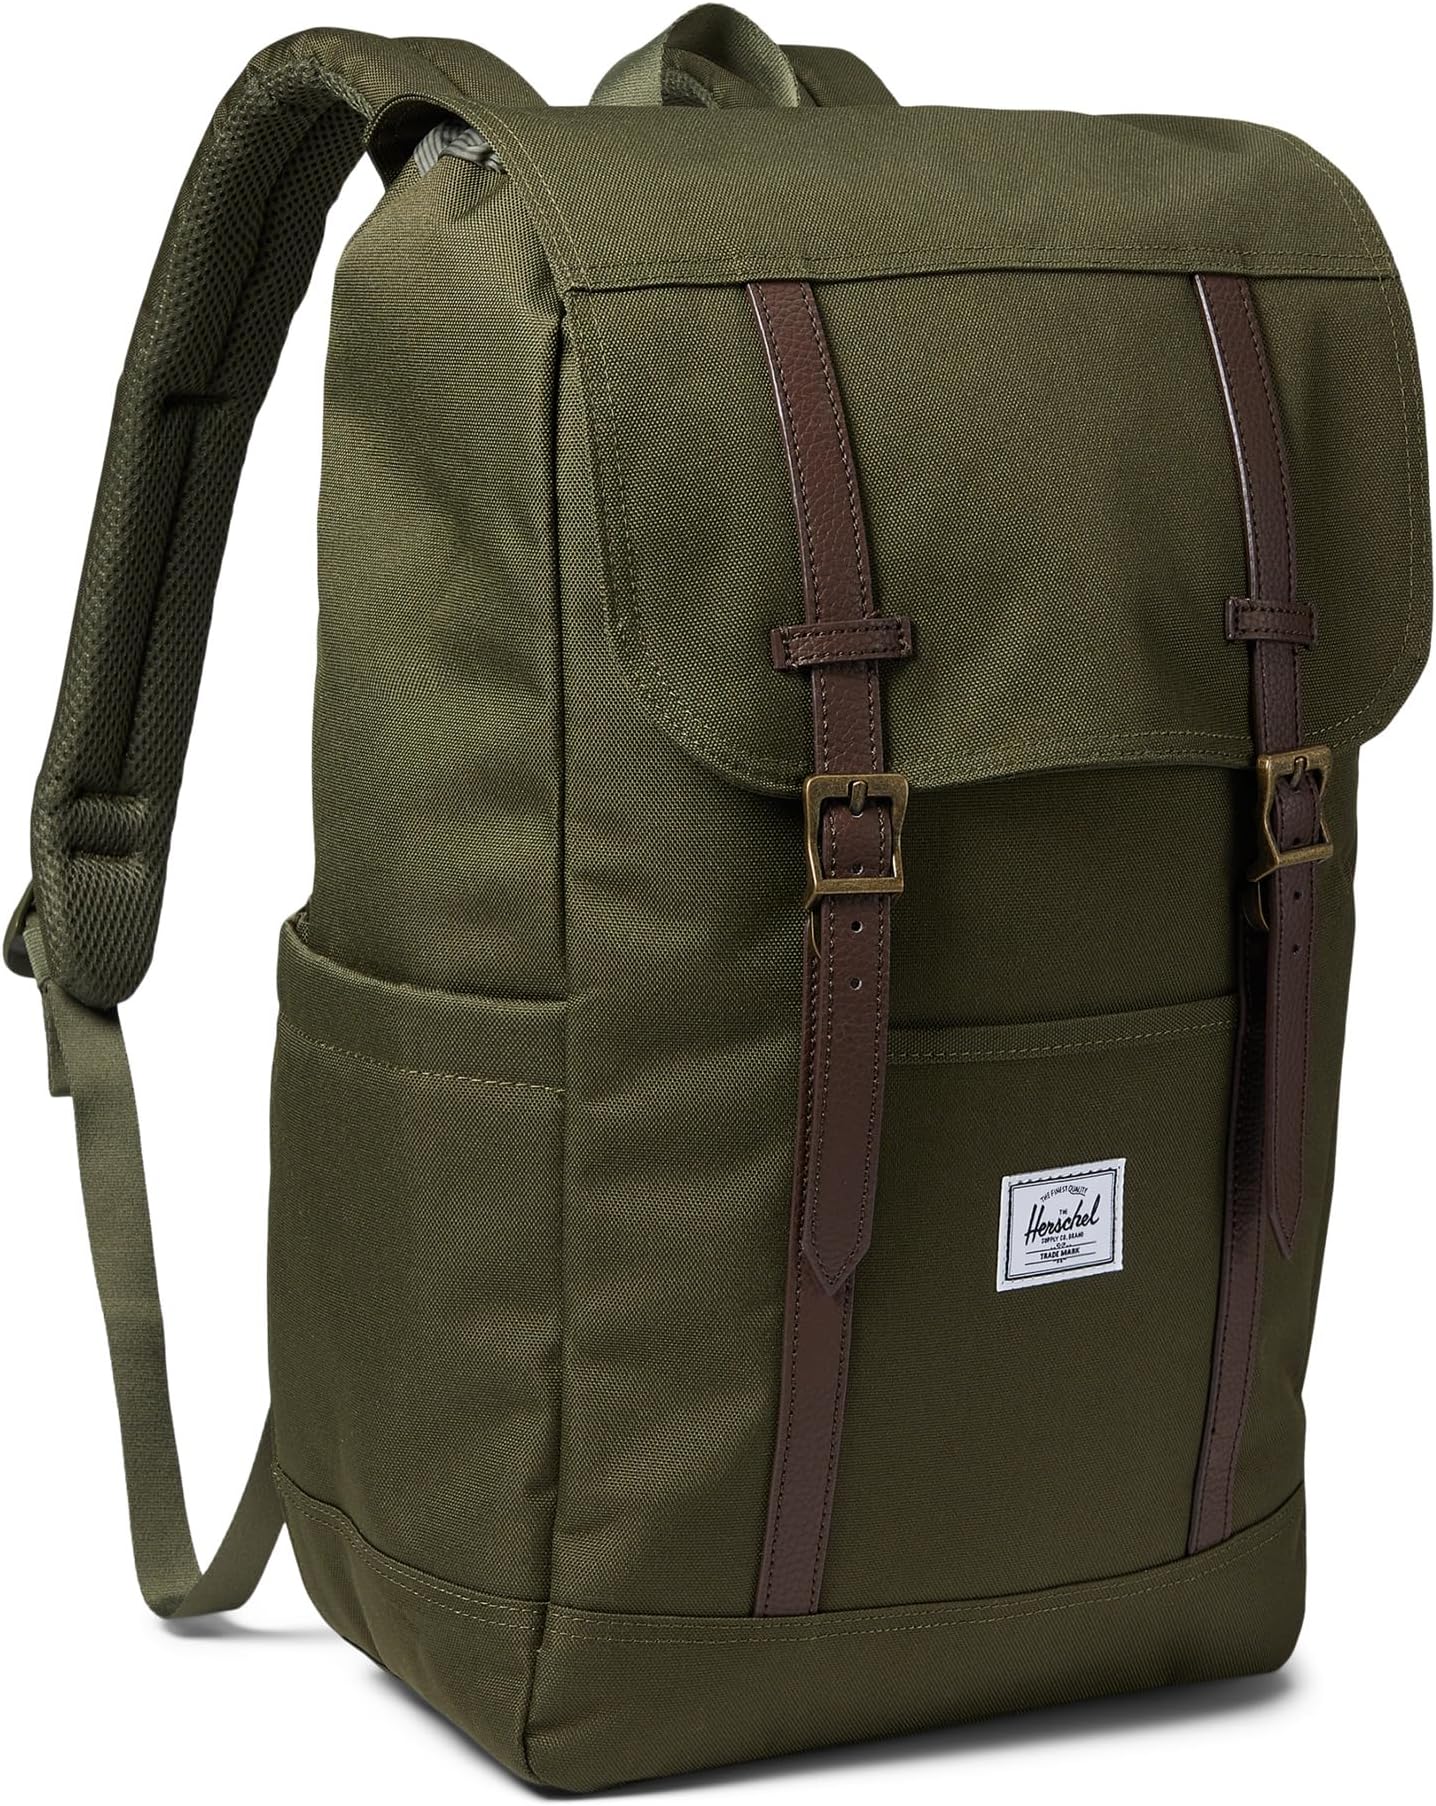 спортивная сумка heritage herschel supply co цвет ivy green chicory coffee Рюкзак Retreat Backpack Herschel Supply Co., цвет Ivy Green